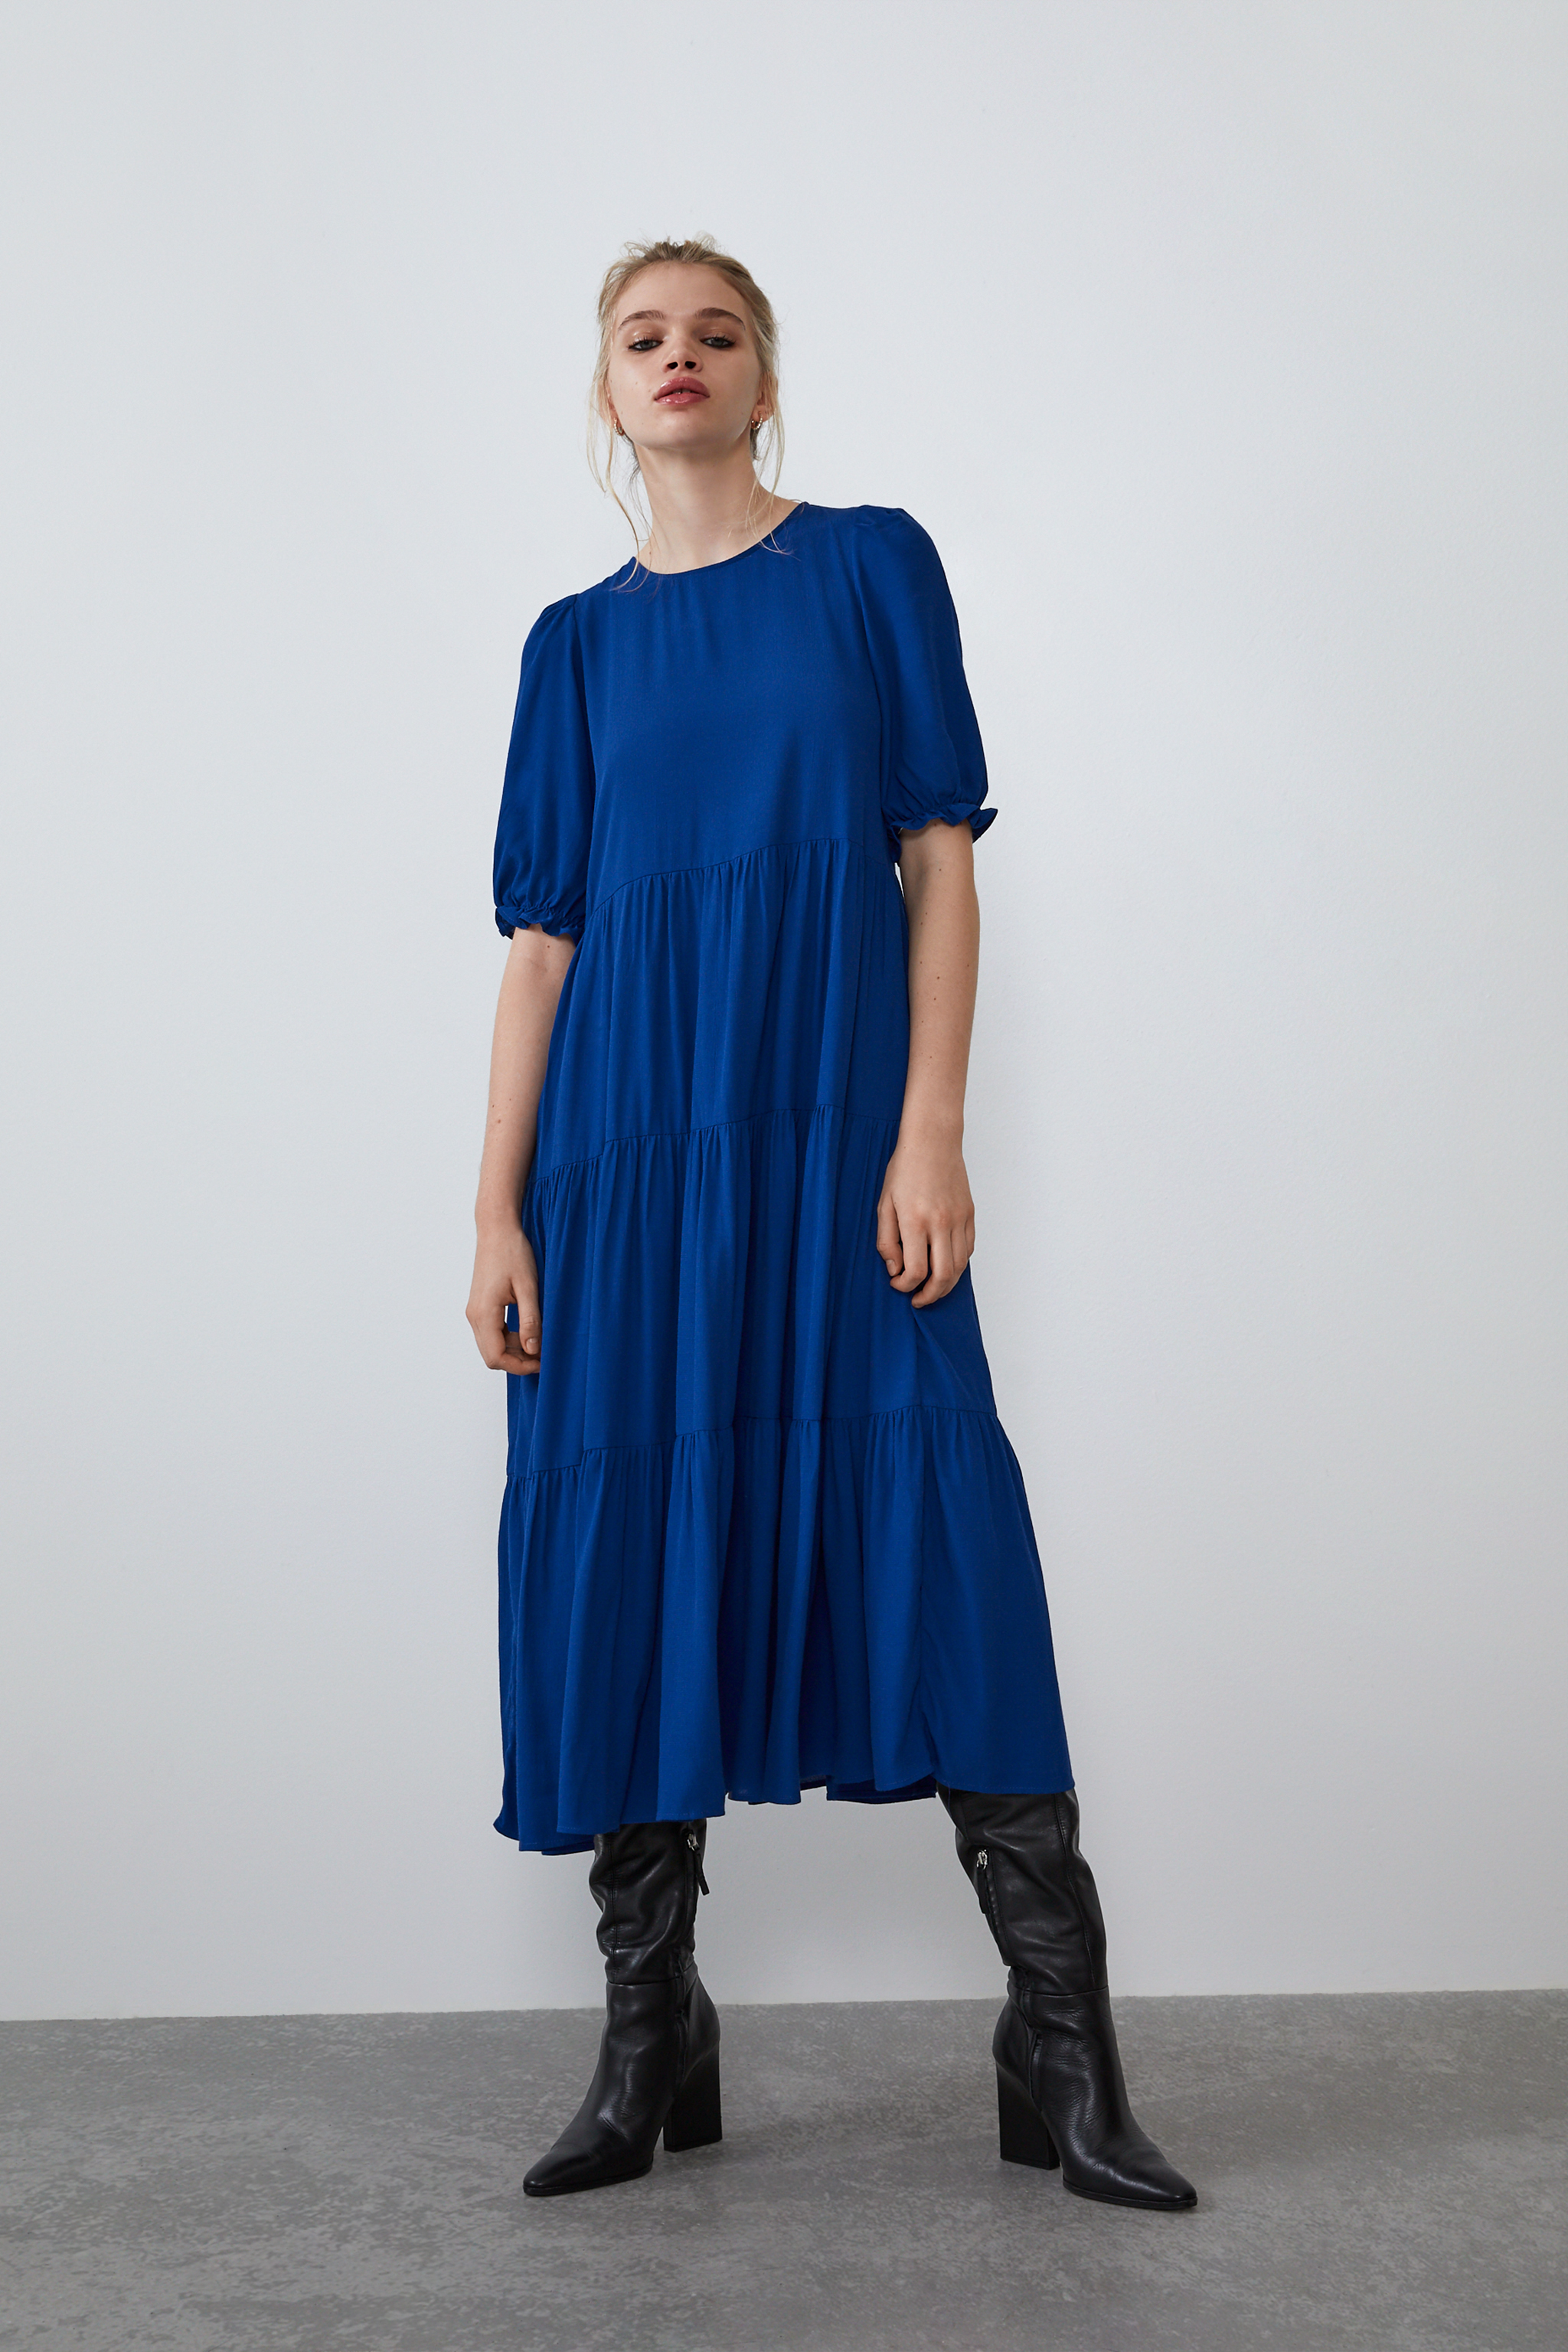 Zara PUFF SLEEVE DRESS WITH PLEATS - 00003304-S2019